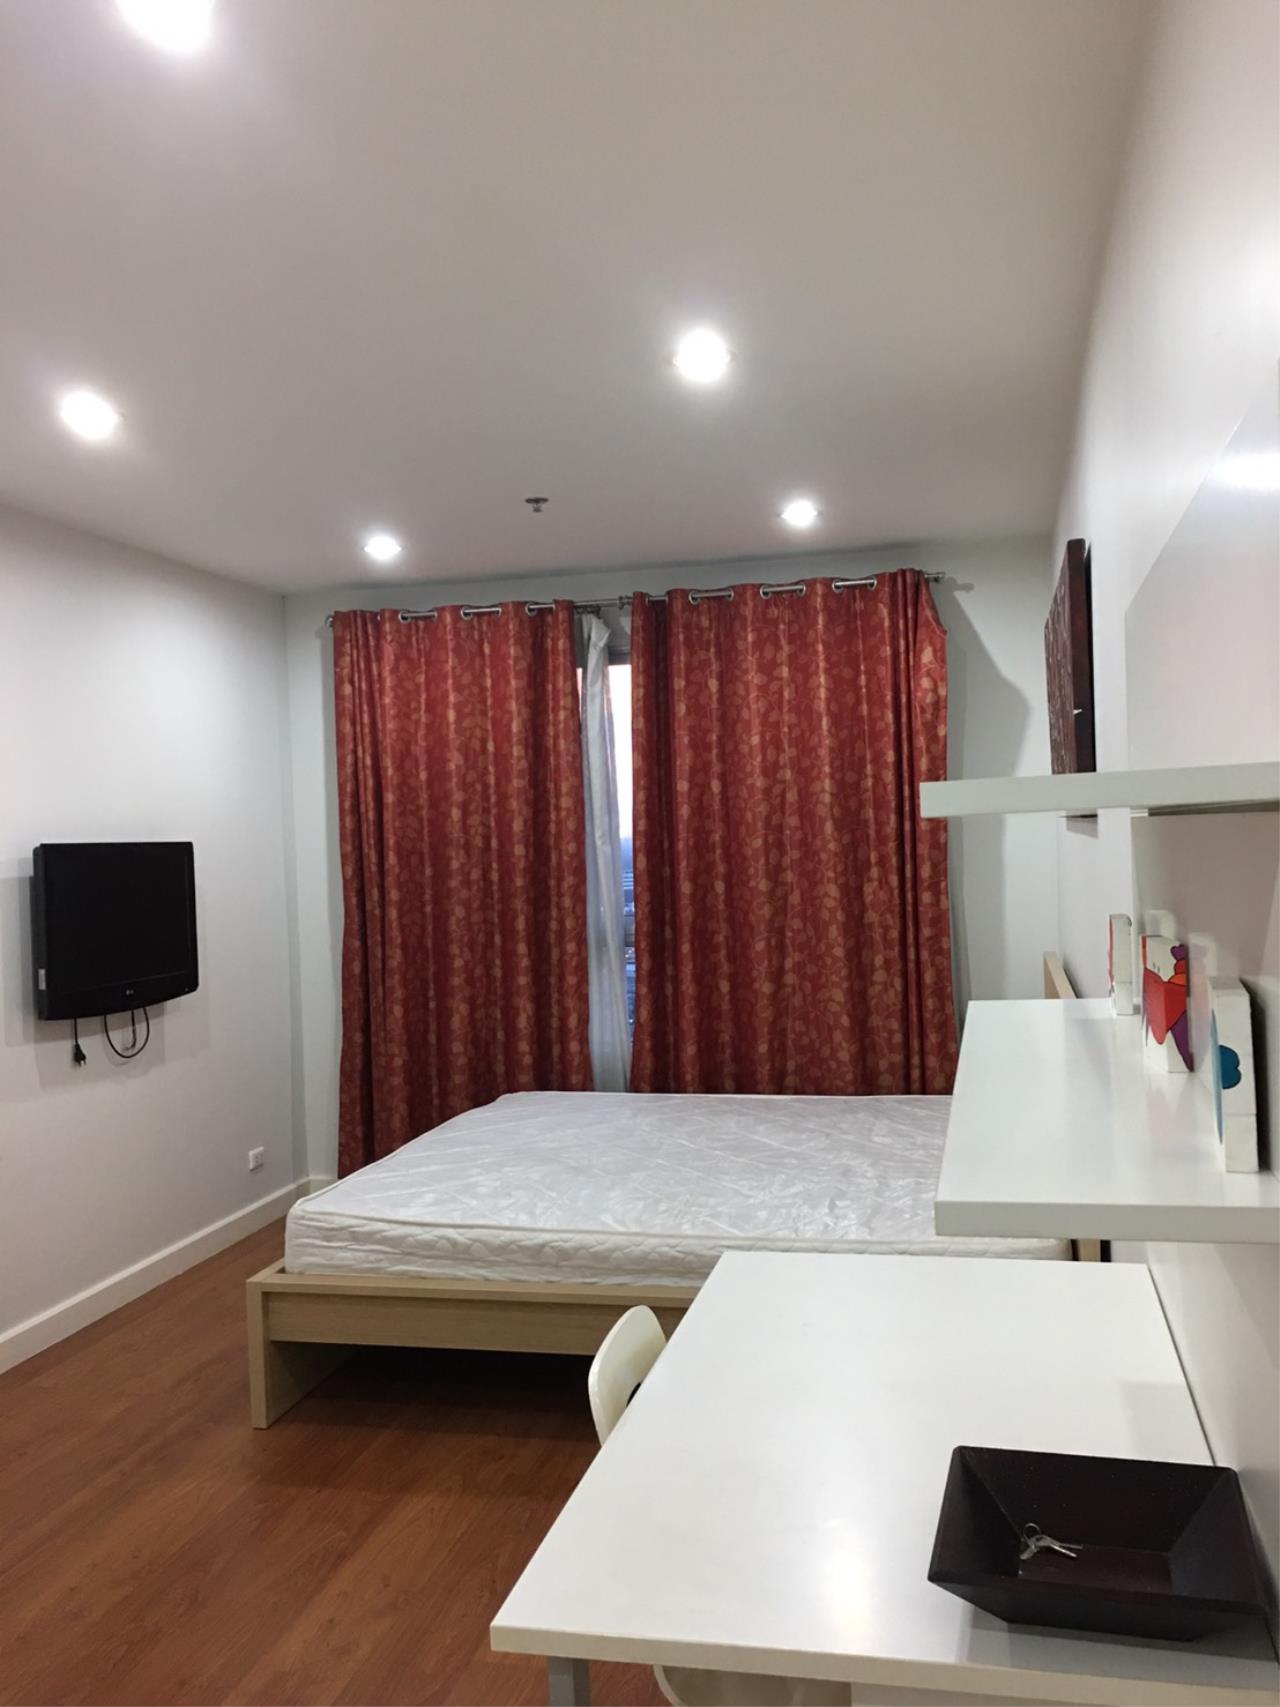 RE/MAX Properties Agency's 1 Bedroom for Rent Condo One X 3